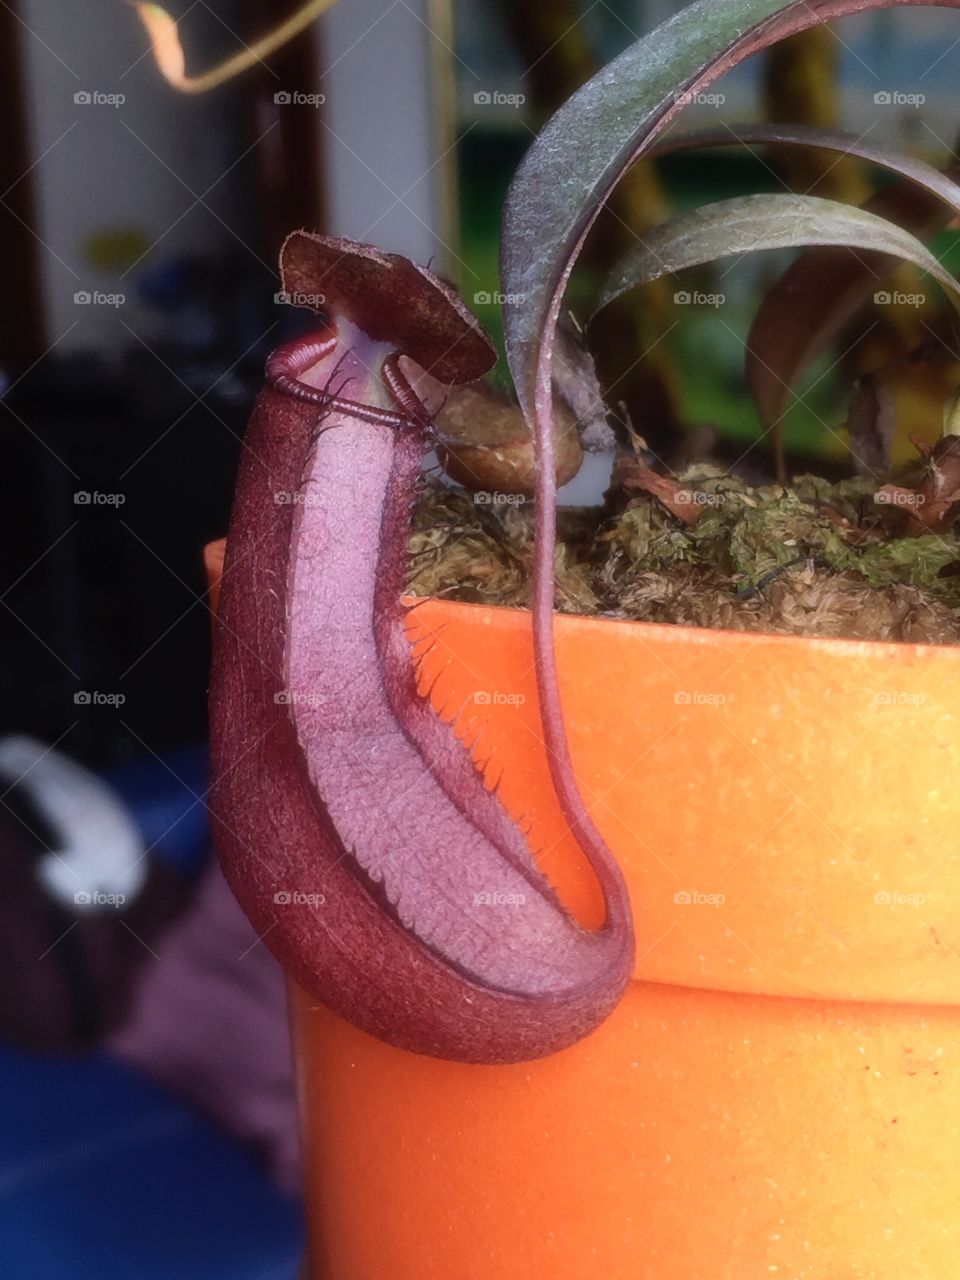 Carnivorous plant